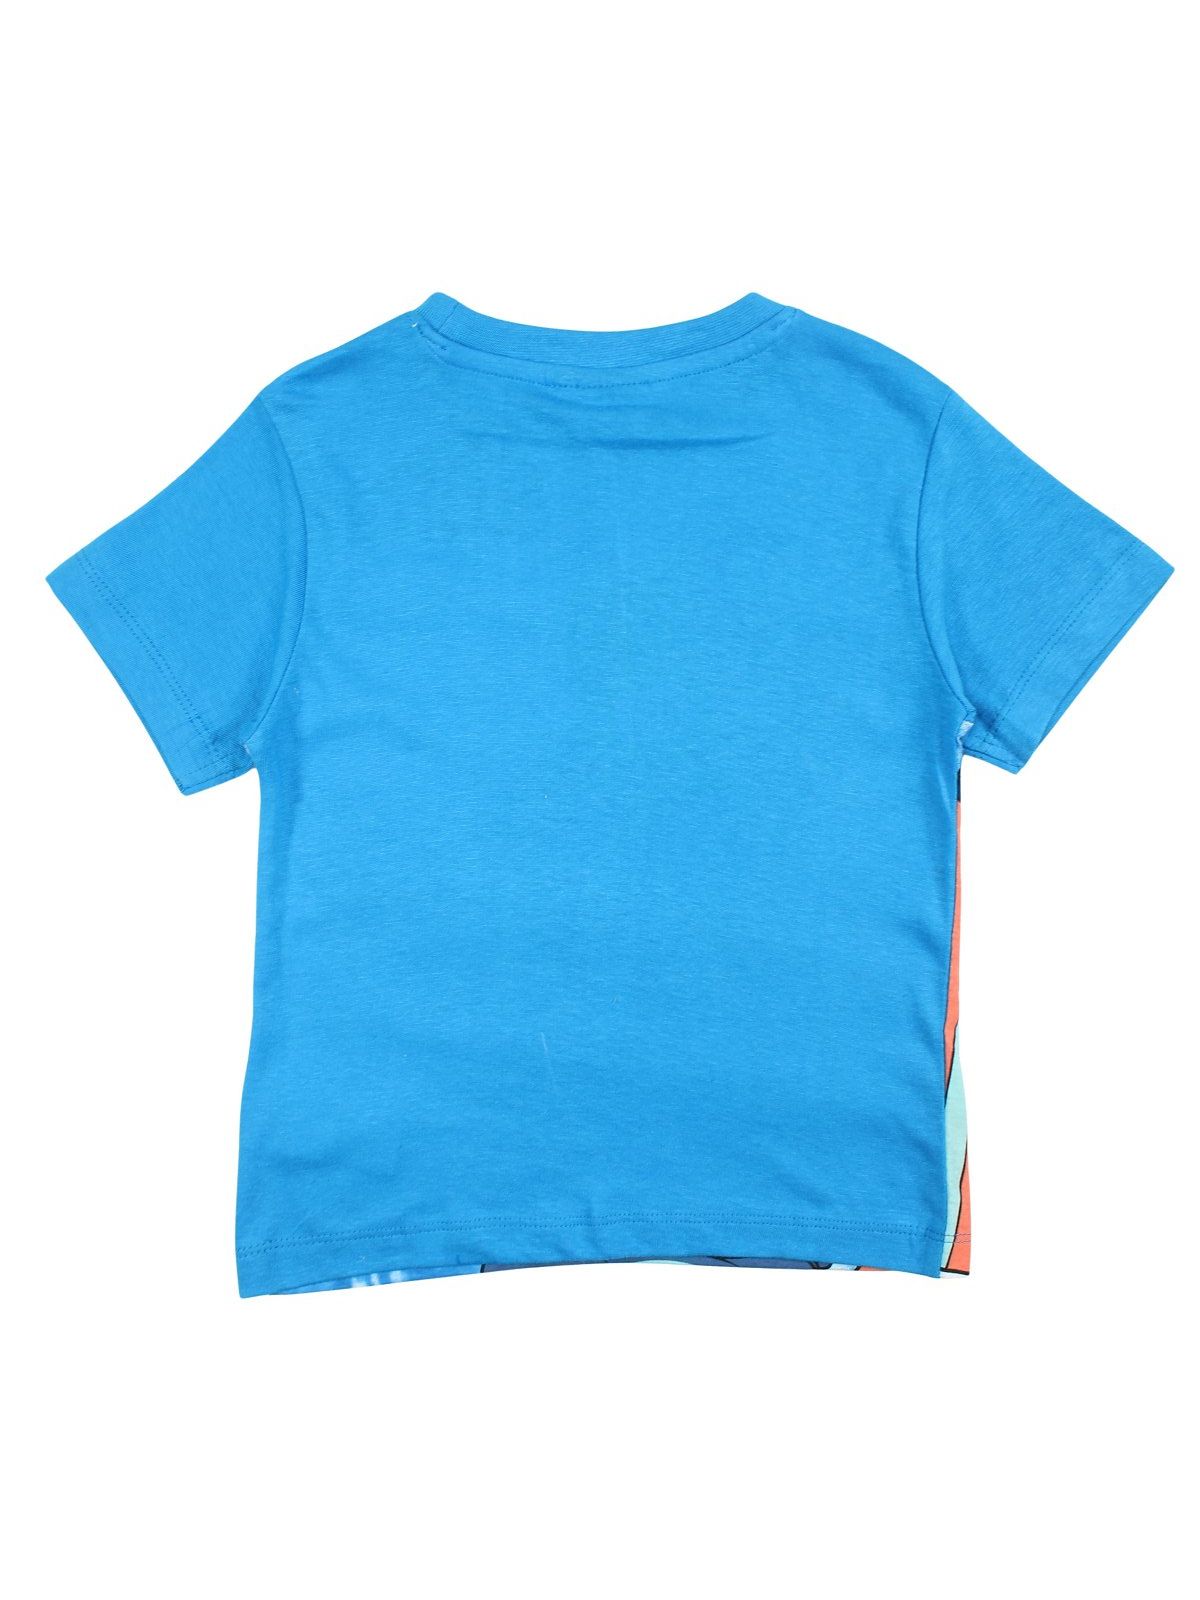 Lilo & Stitch-shirt.